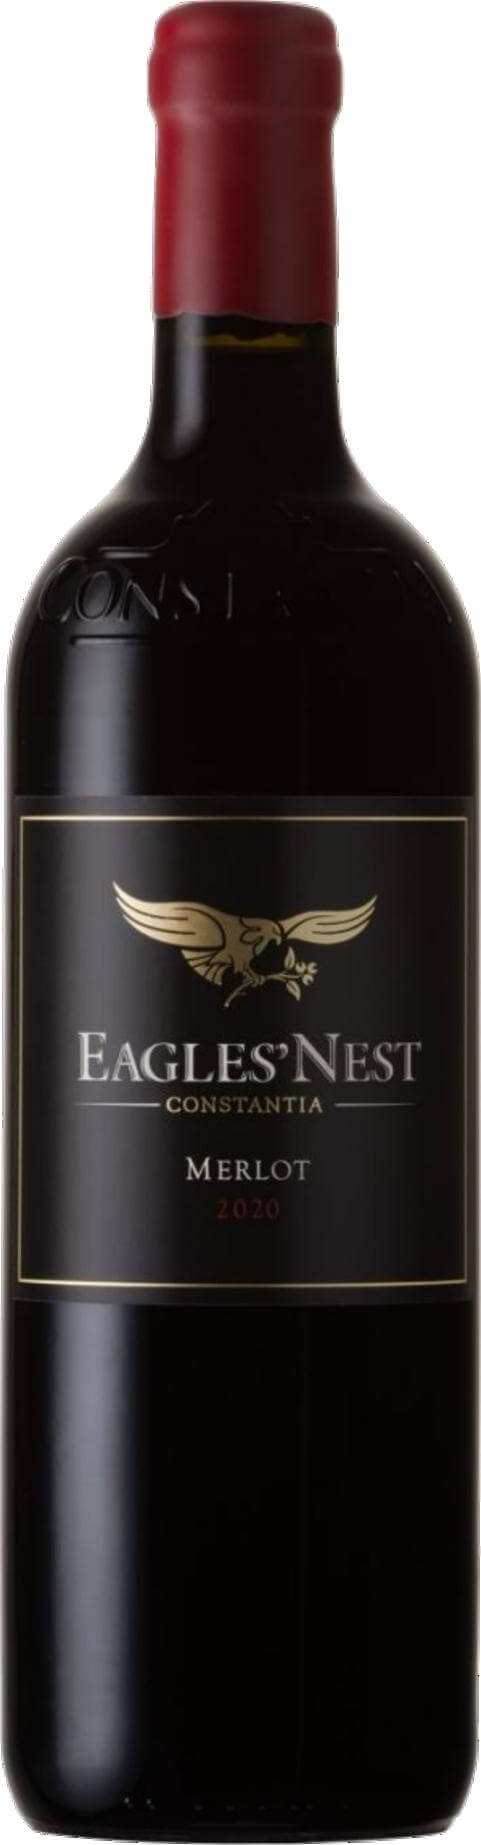 Eagles' Nest Constantia Reserve Merlot 2020